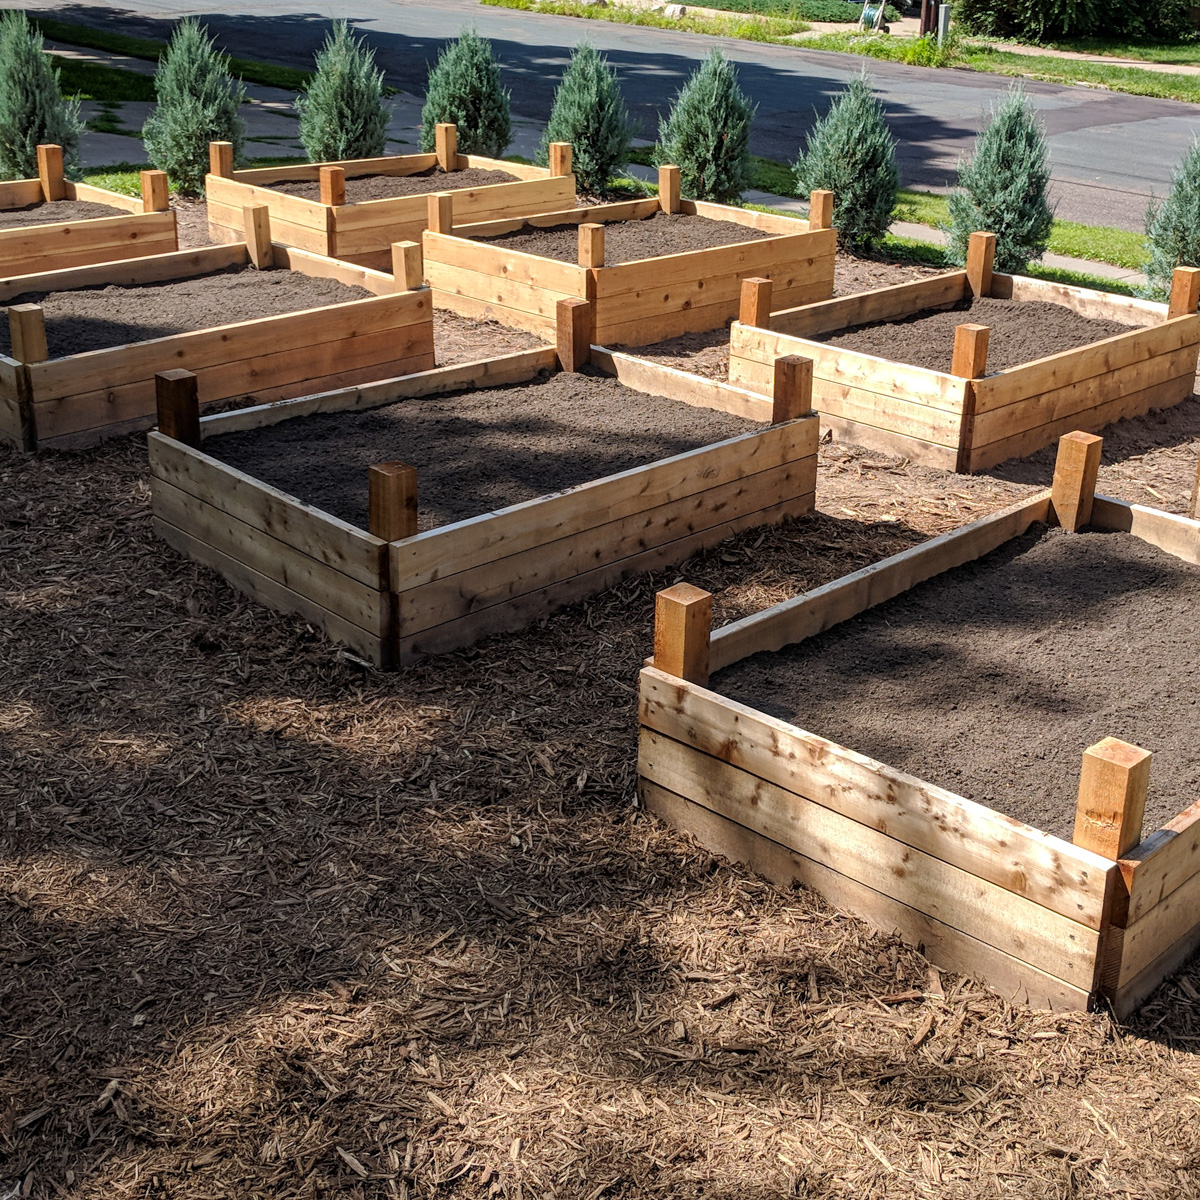 Cedar raised bed vegetable garden build.